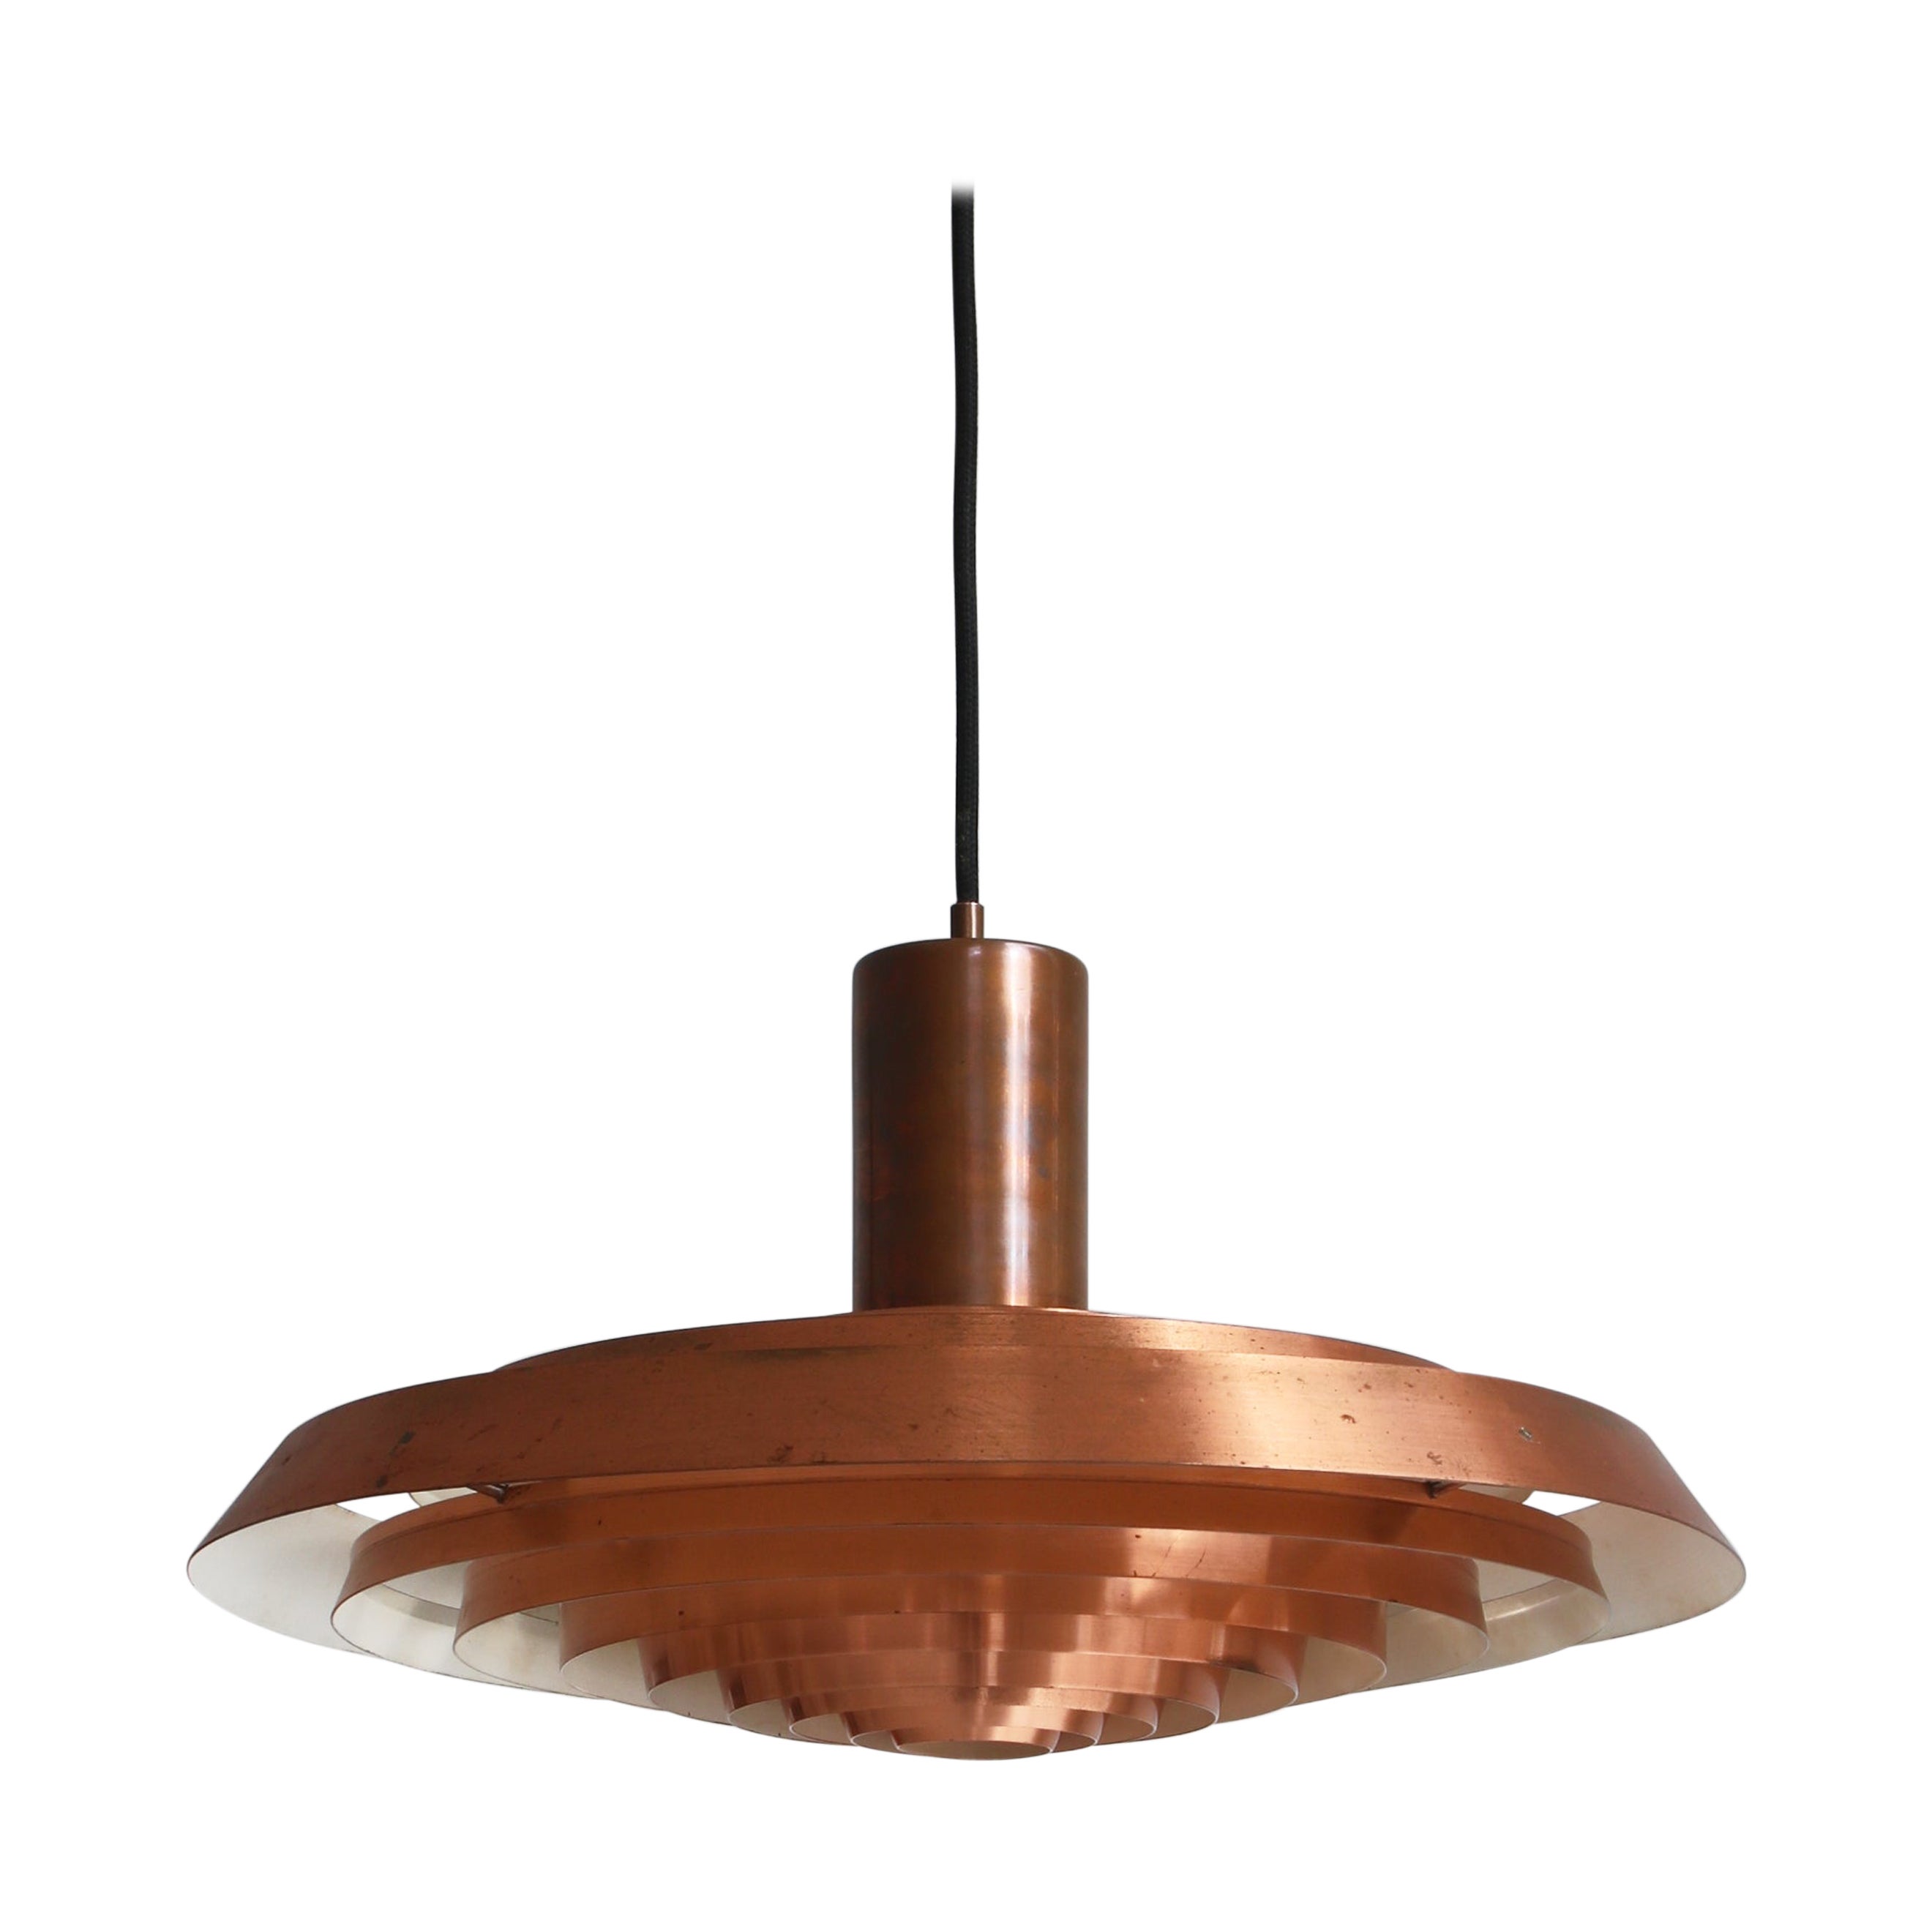 Poul Henningsen "Plate" PH-Lamp Patinated Copper, Louis Poulsen, Denmark, 1958